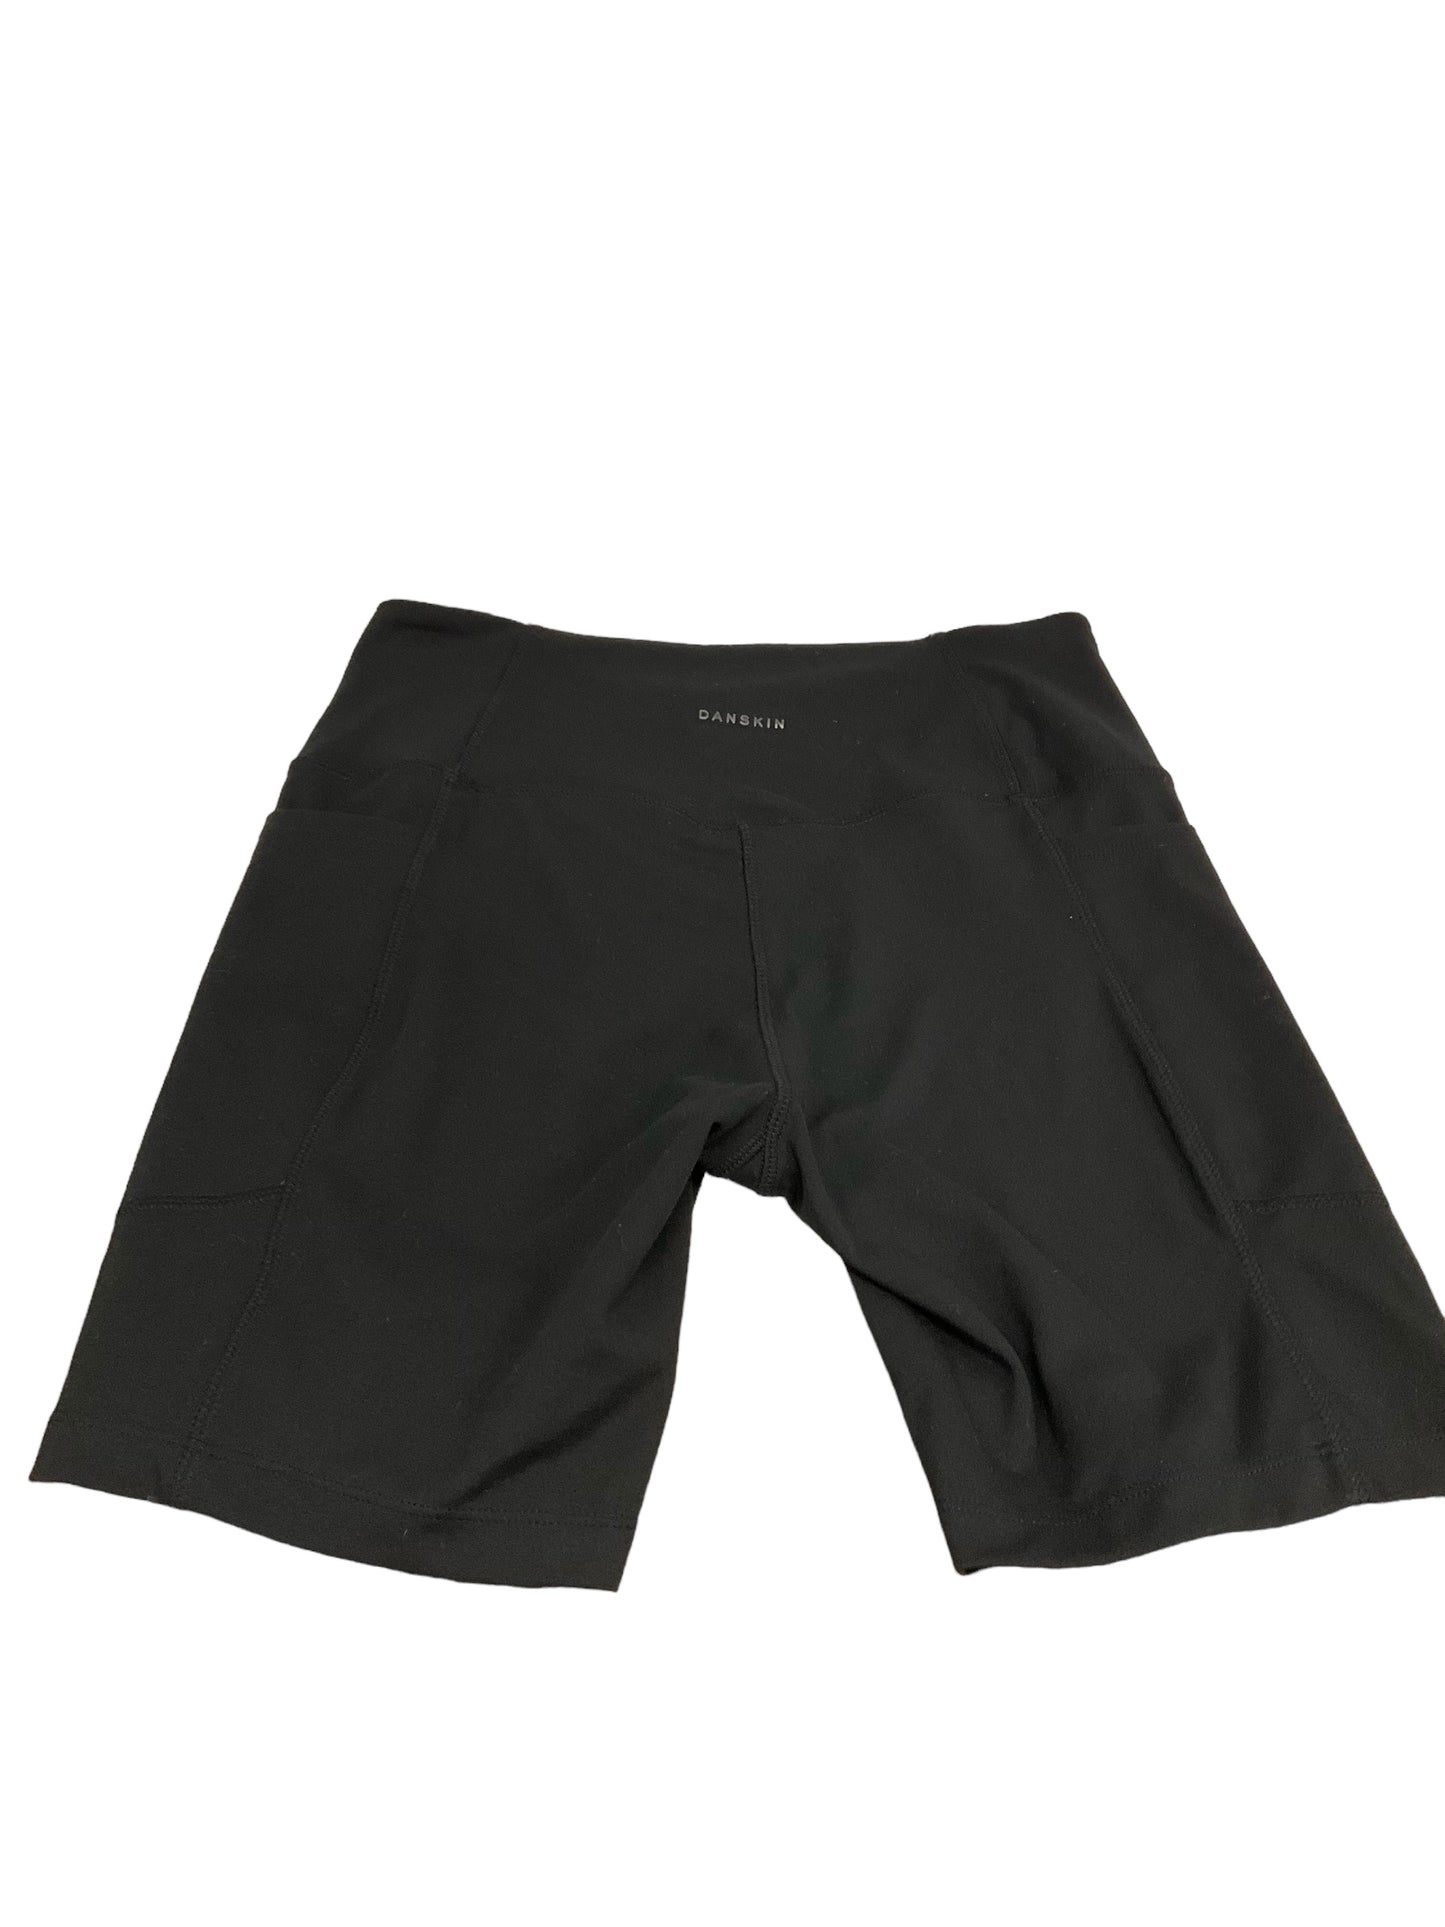 Athletic Shorts By Danskin  Size: M